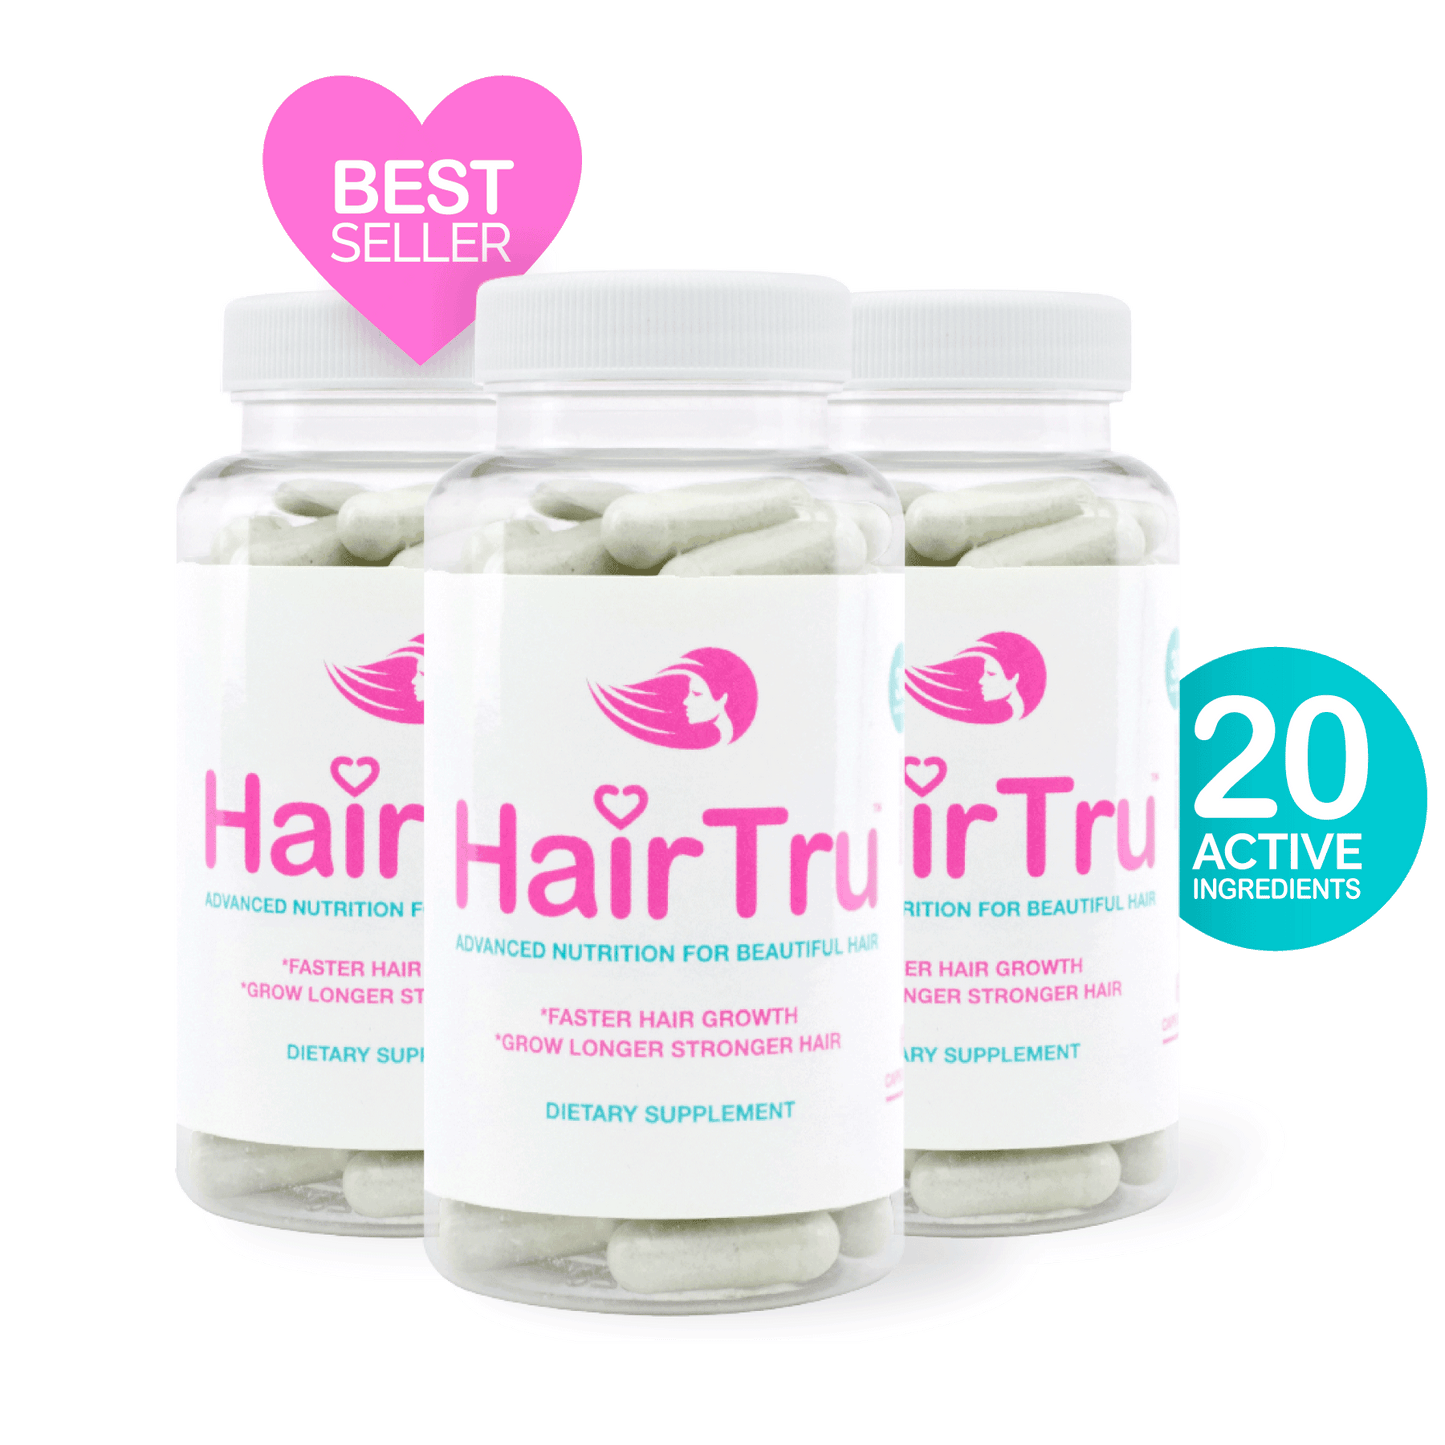 HAIRCARE BUNDLE: 3 Month of HairTru™ + Scalp Hair Massager + FREE Organic Brush